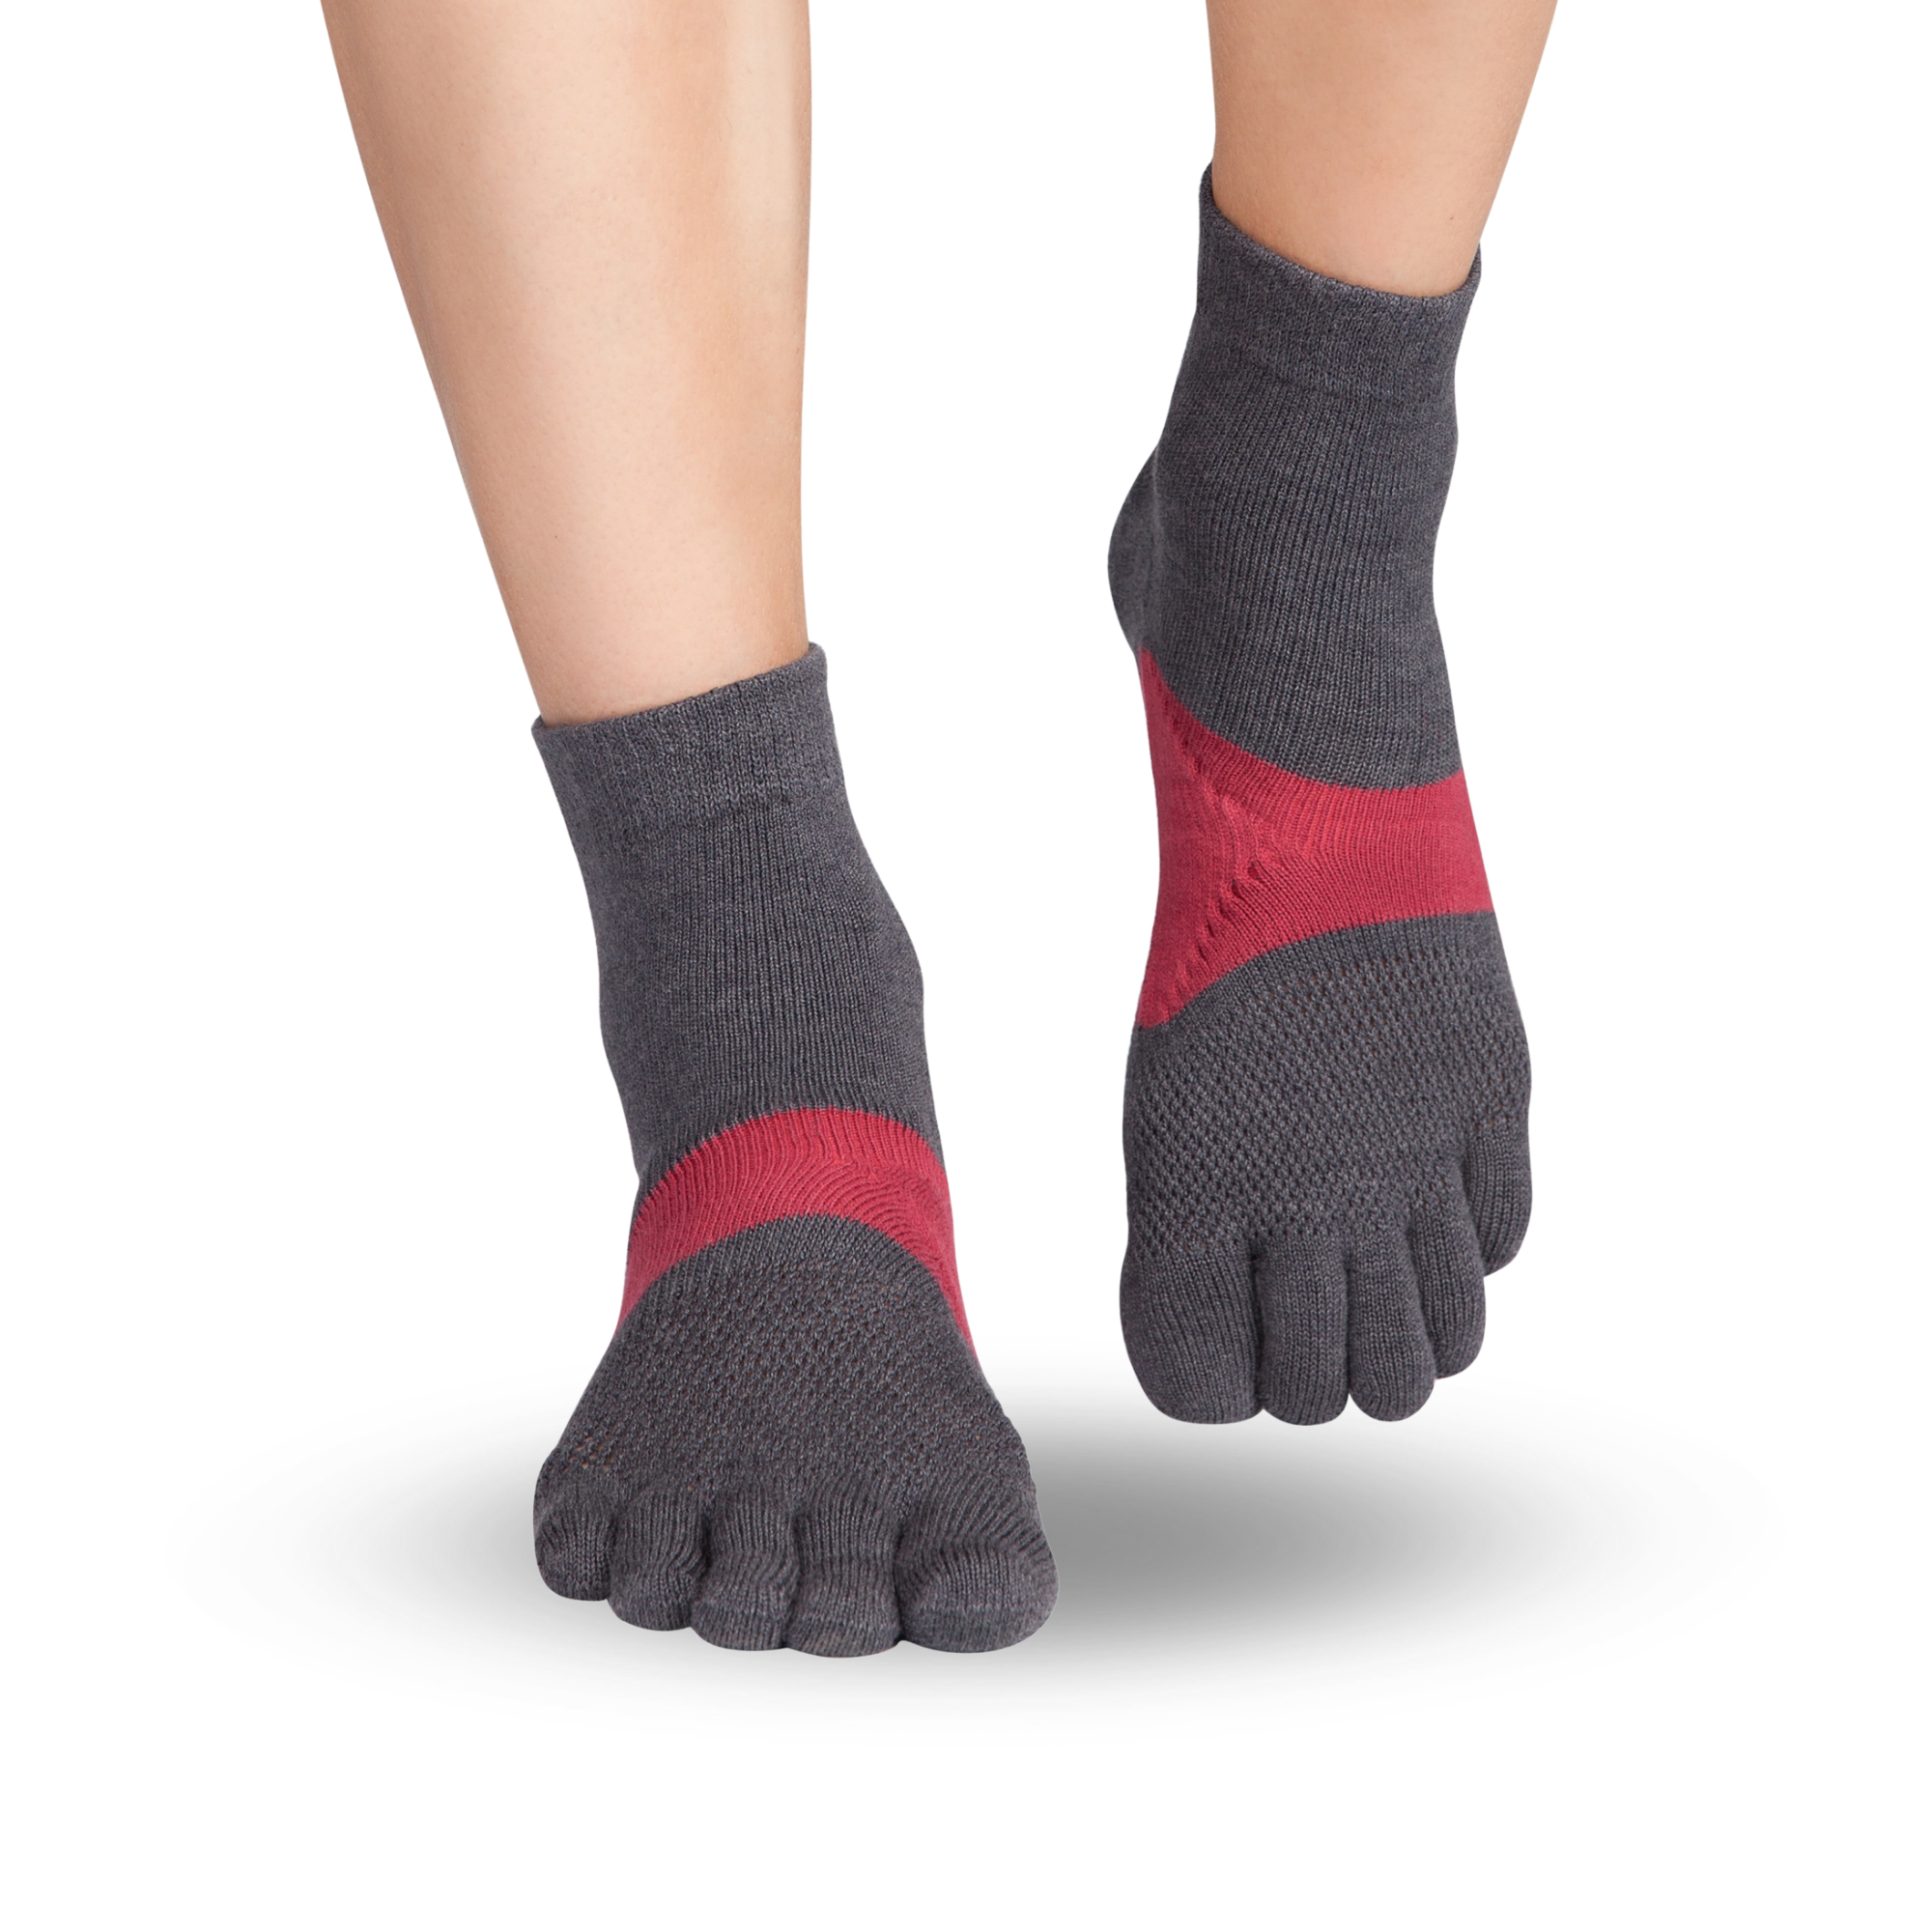 Running TS Running-calze con dita - l'essenziale running-calze con dita da Knitido :grigio / rosso carminio